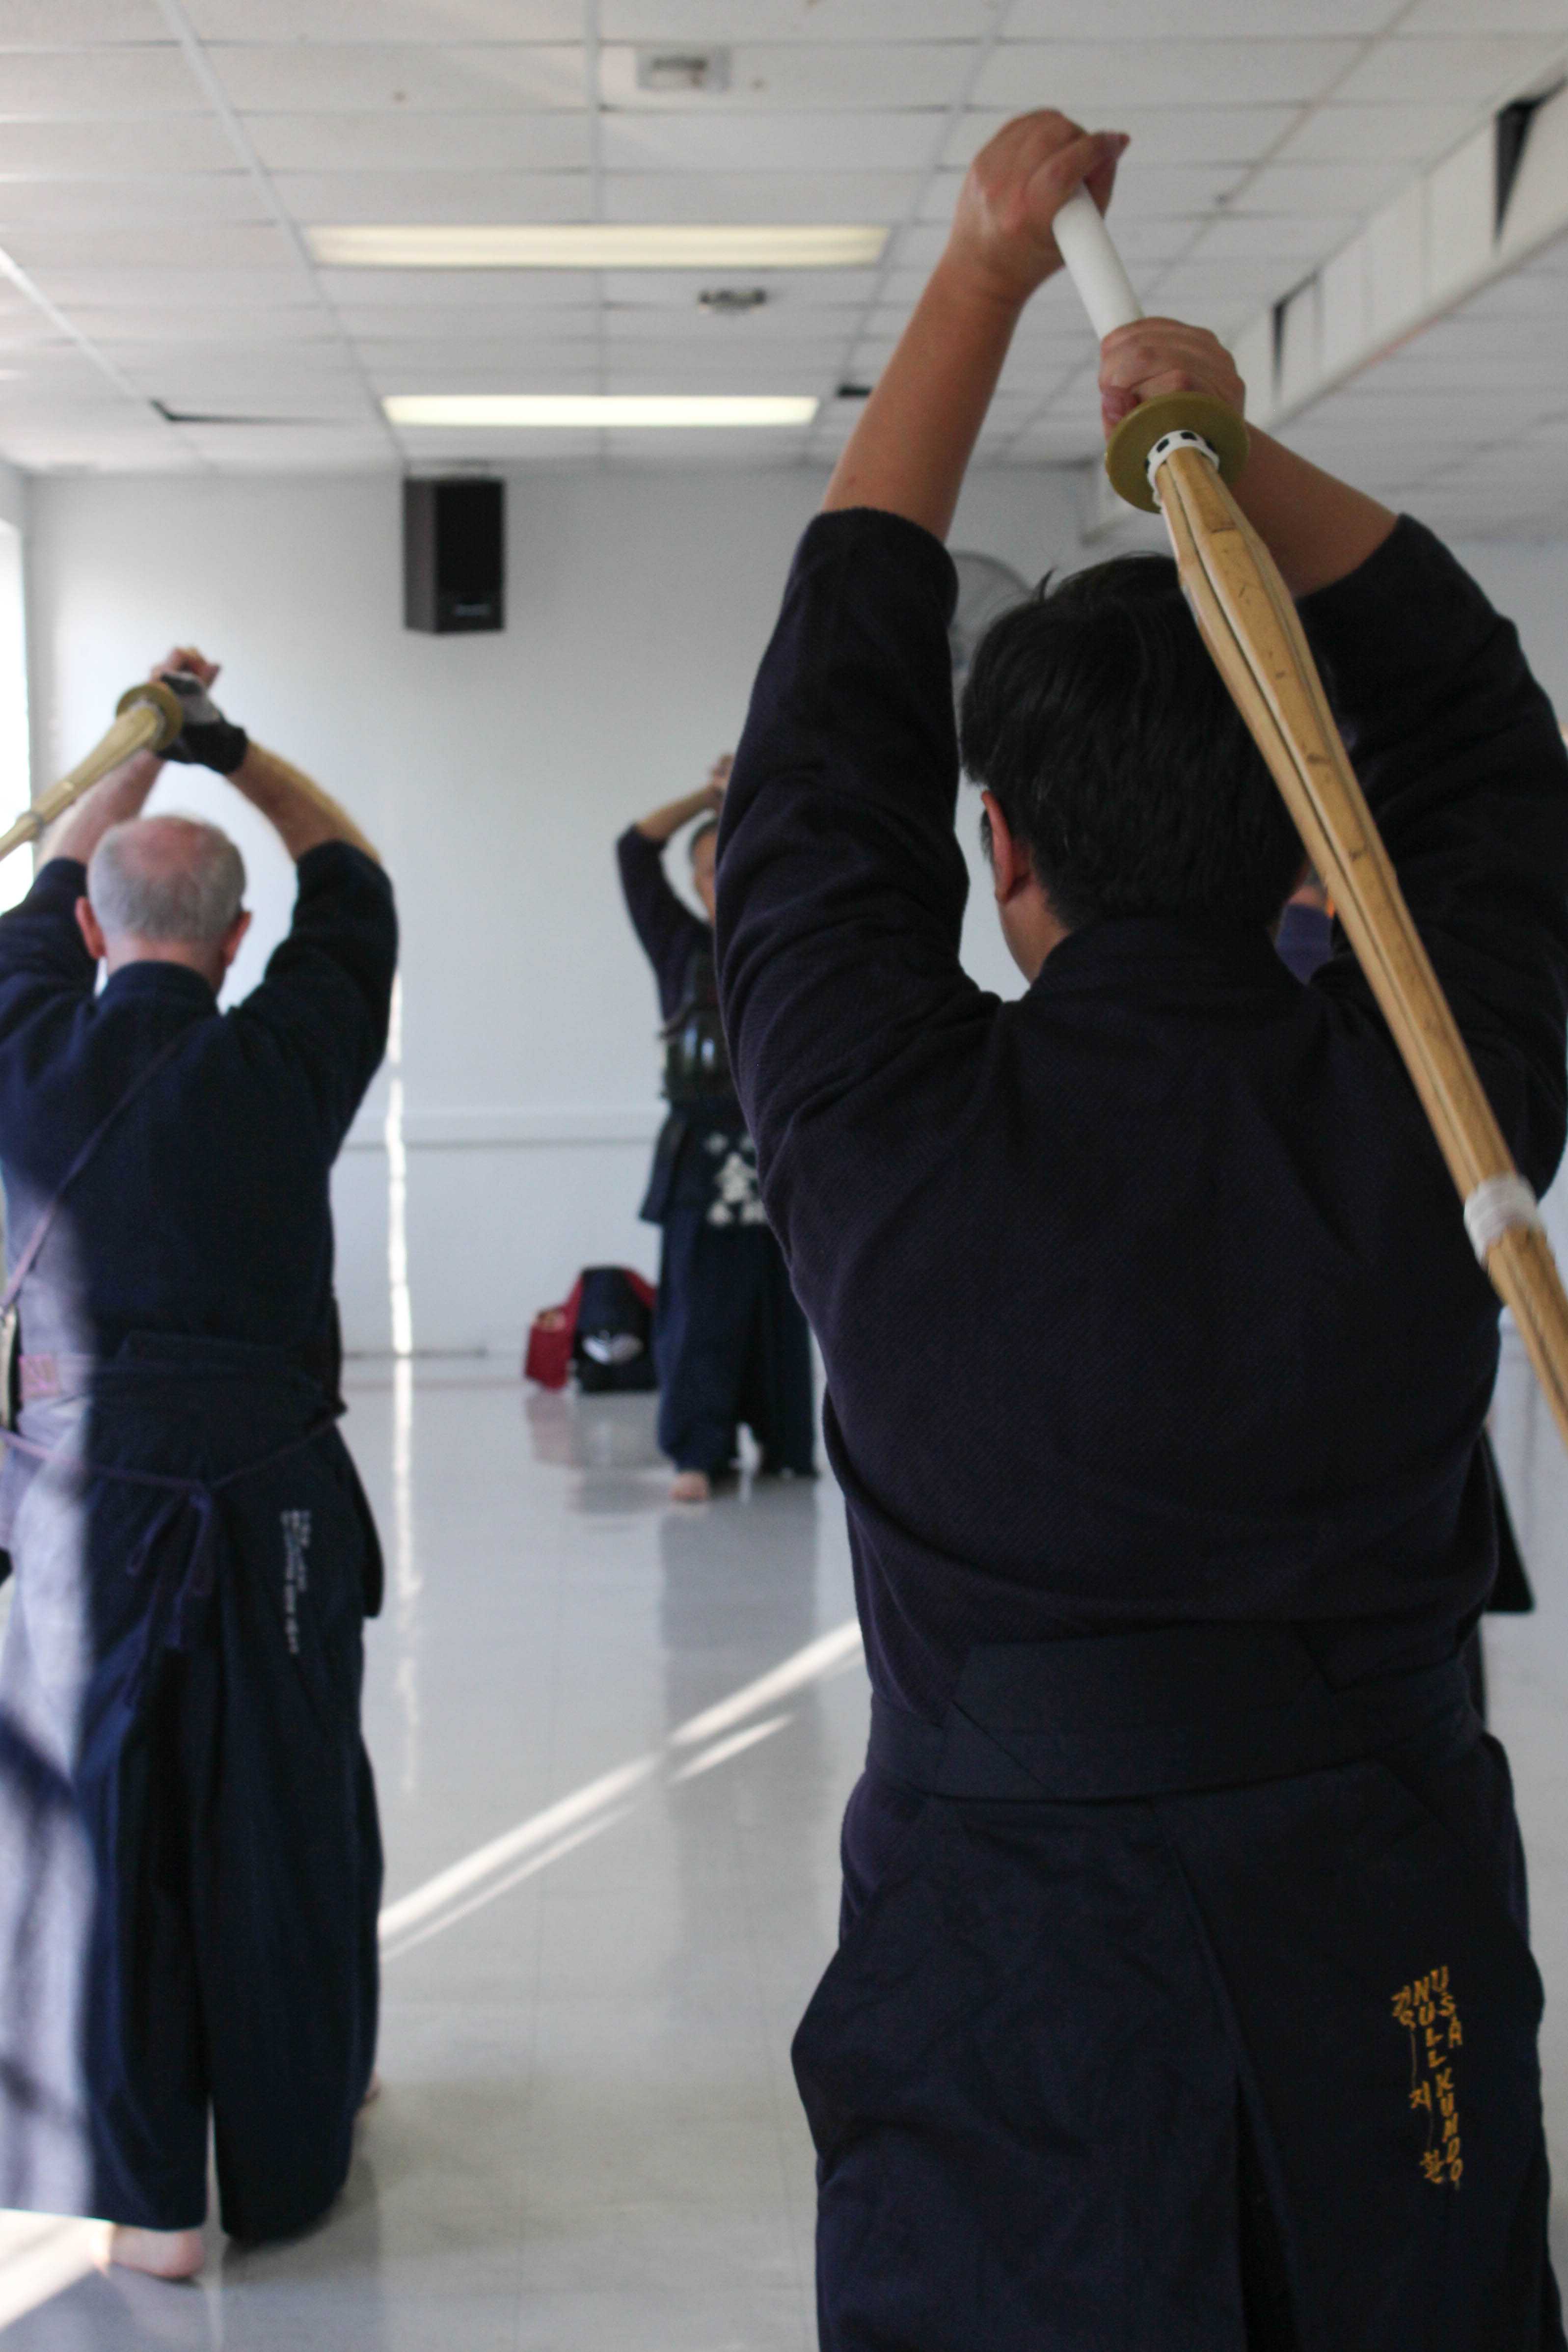 Kumdo Club teaches Korean sword fighting - The Crimson White